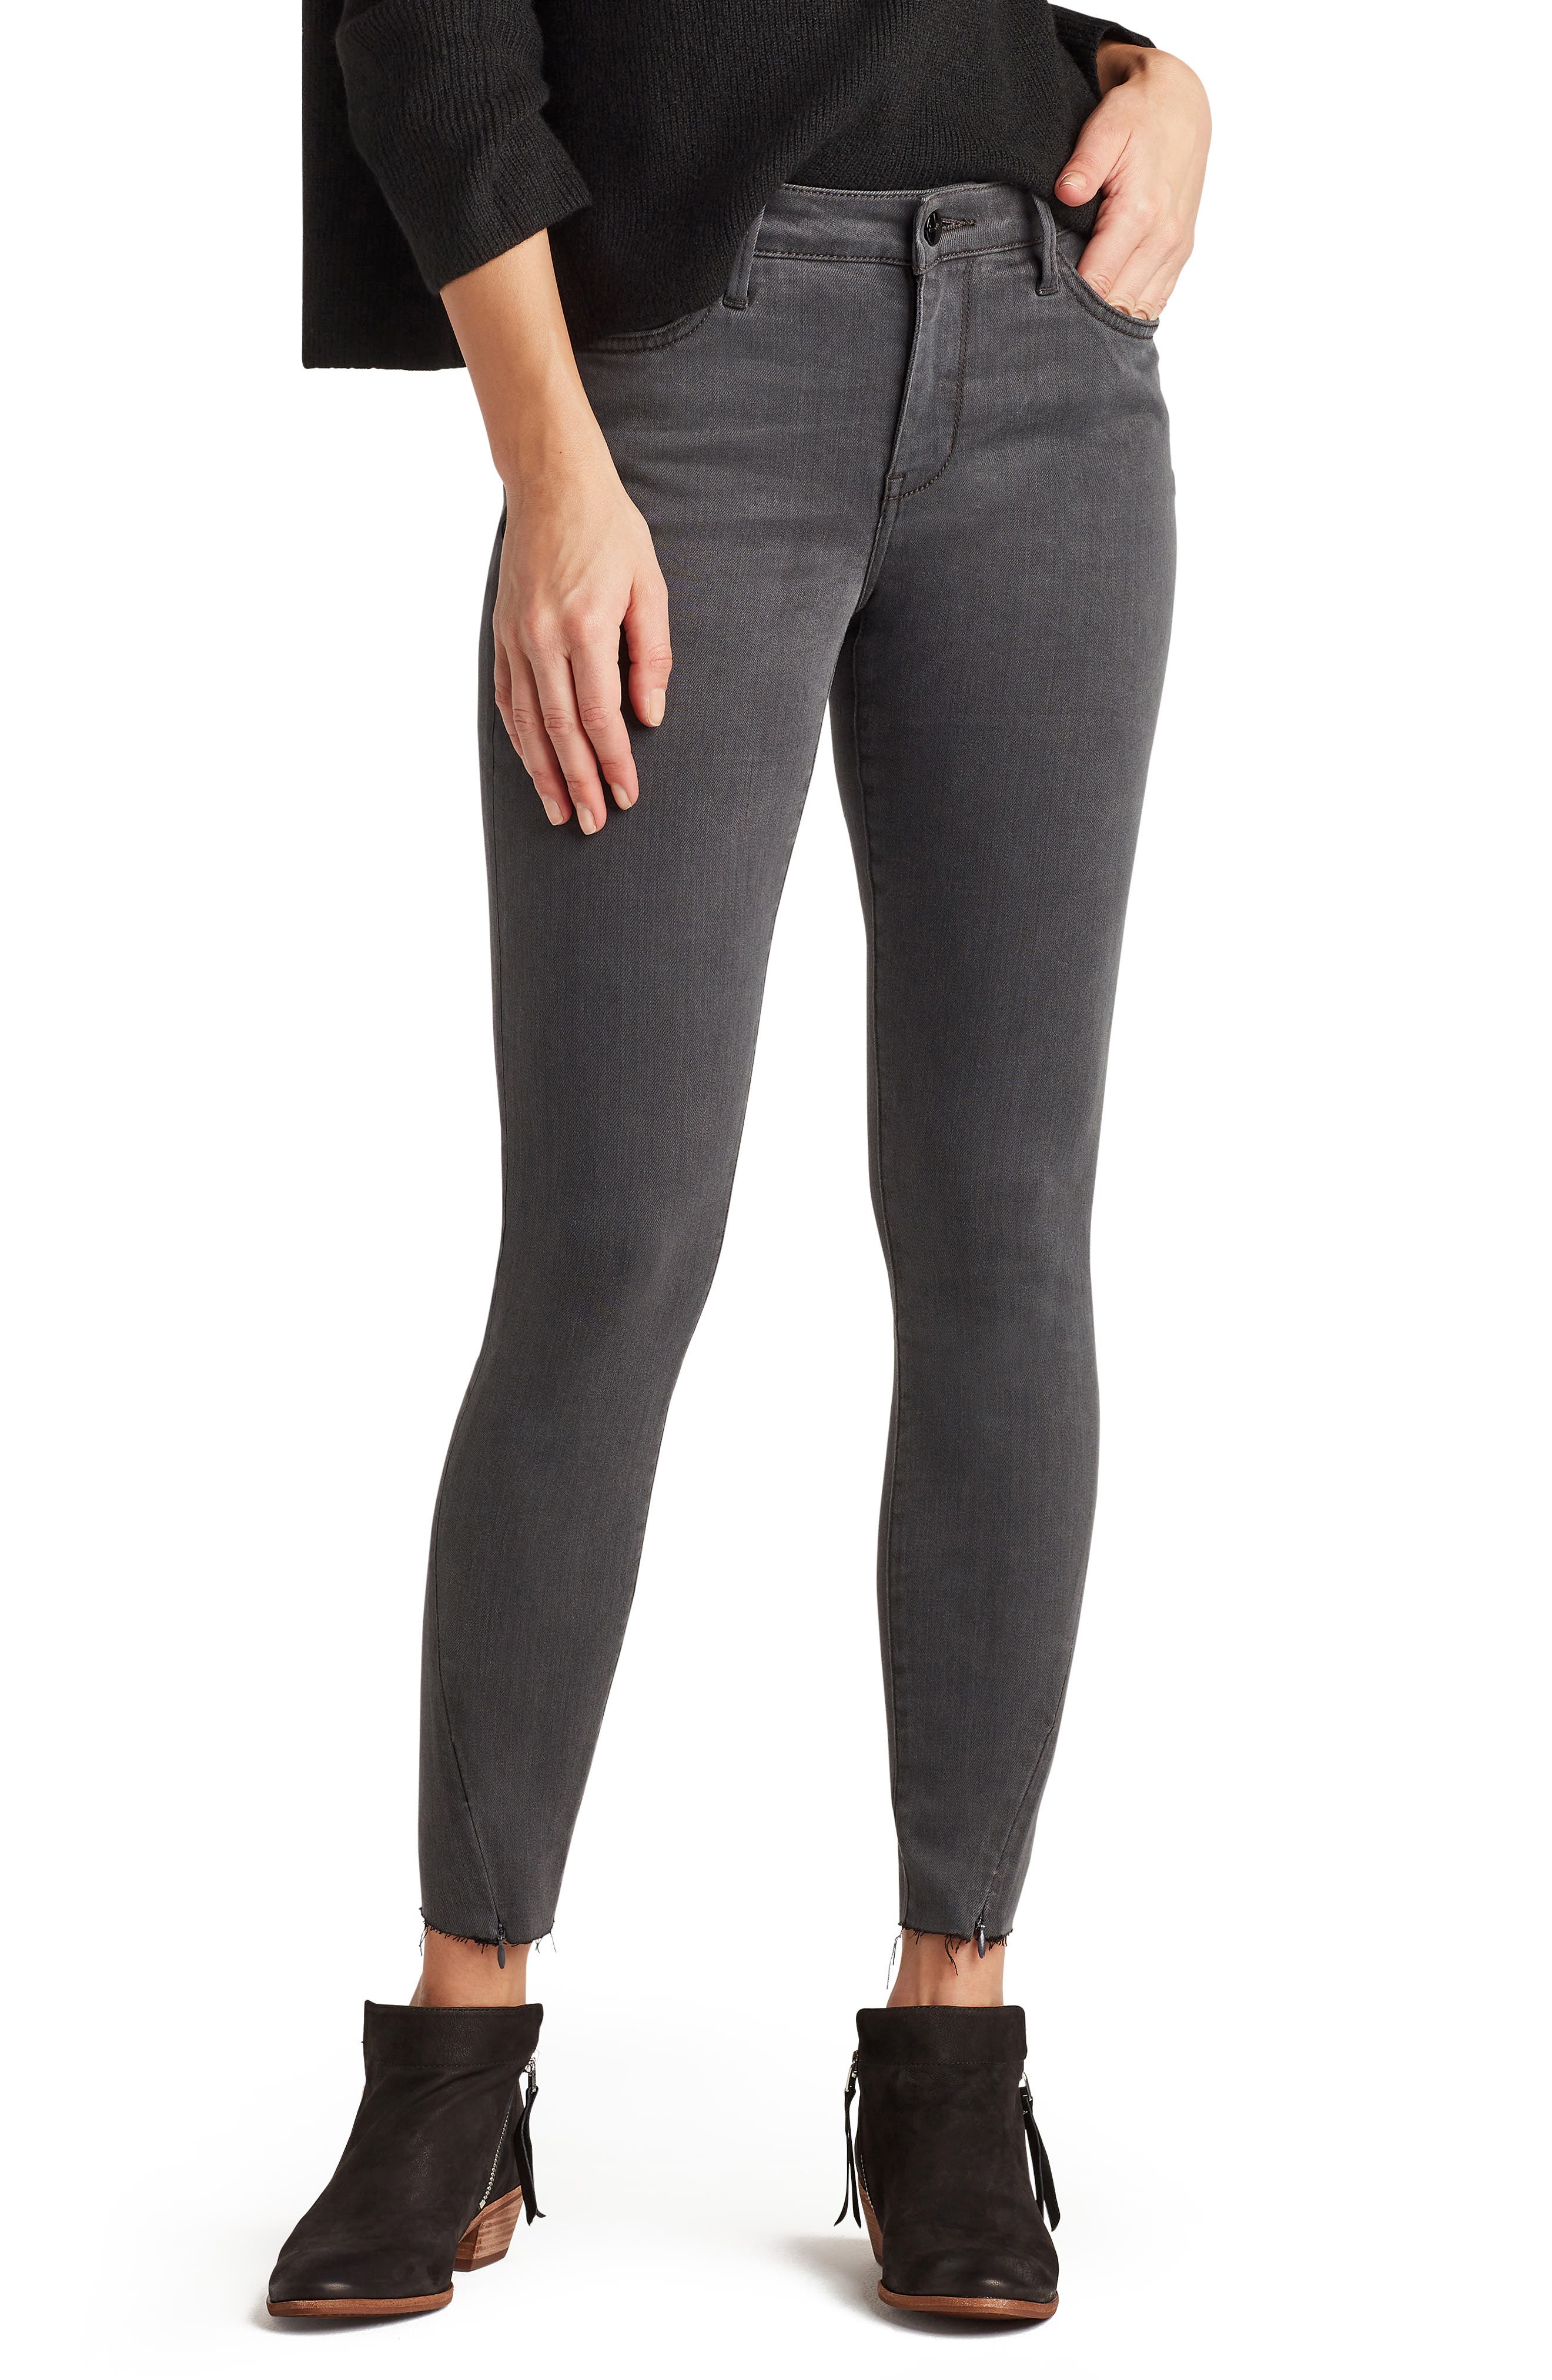 Saga respekt kranium Women's Sam Edelman The Kitten Zip Hem Ankle Skinny Jeans - Sale up to 64%  Off